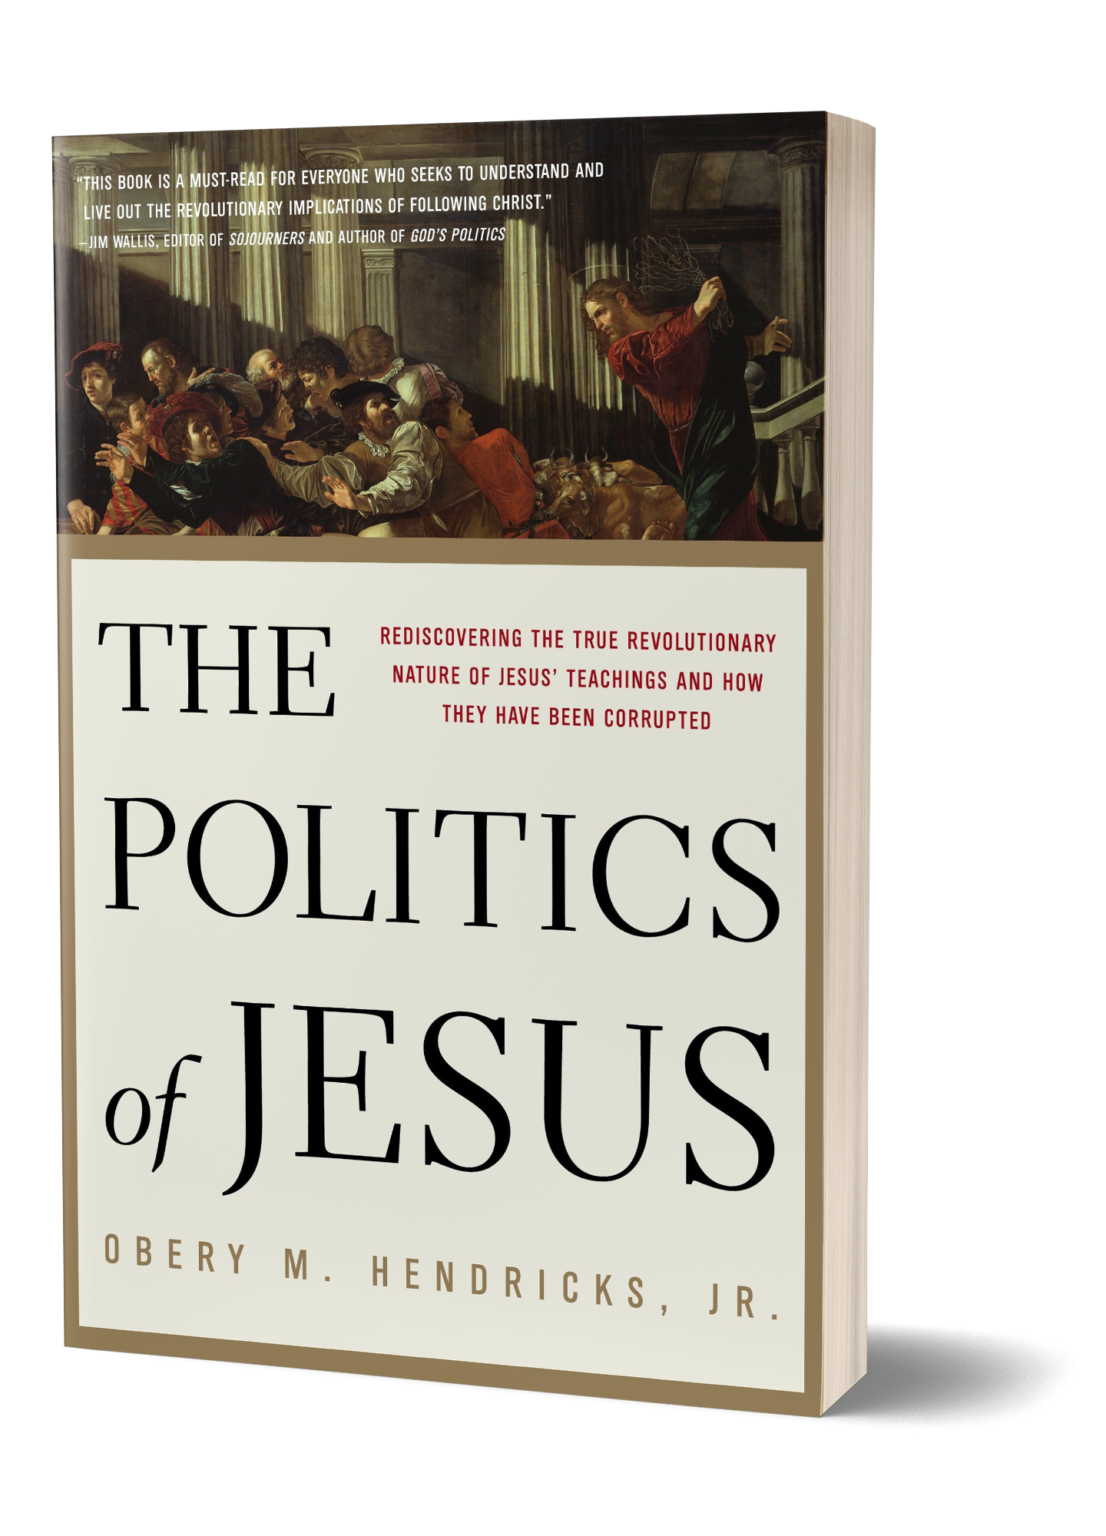 The Politics of Jesus by Obery Hendricks